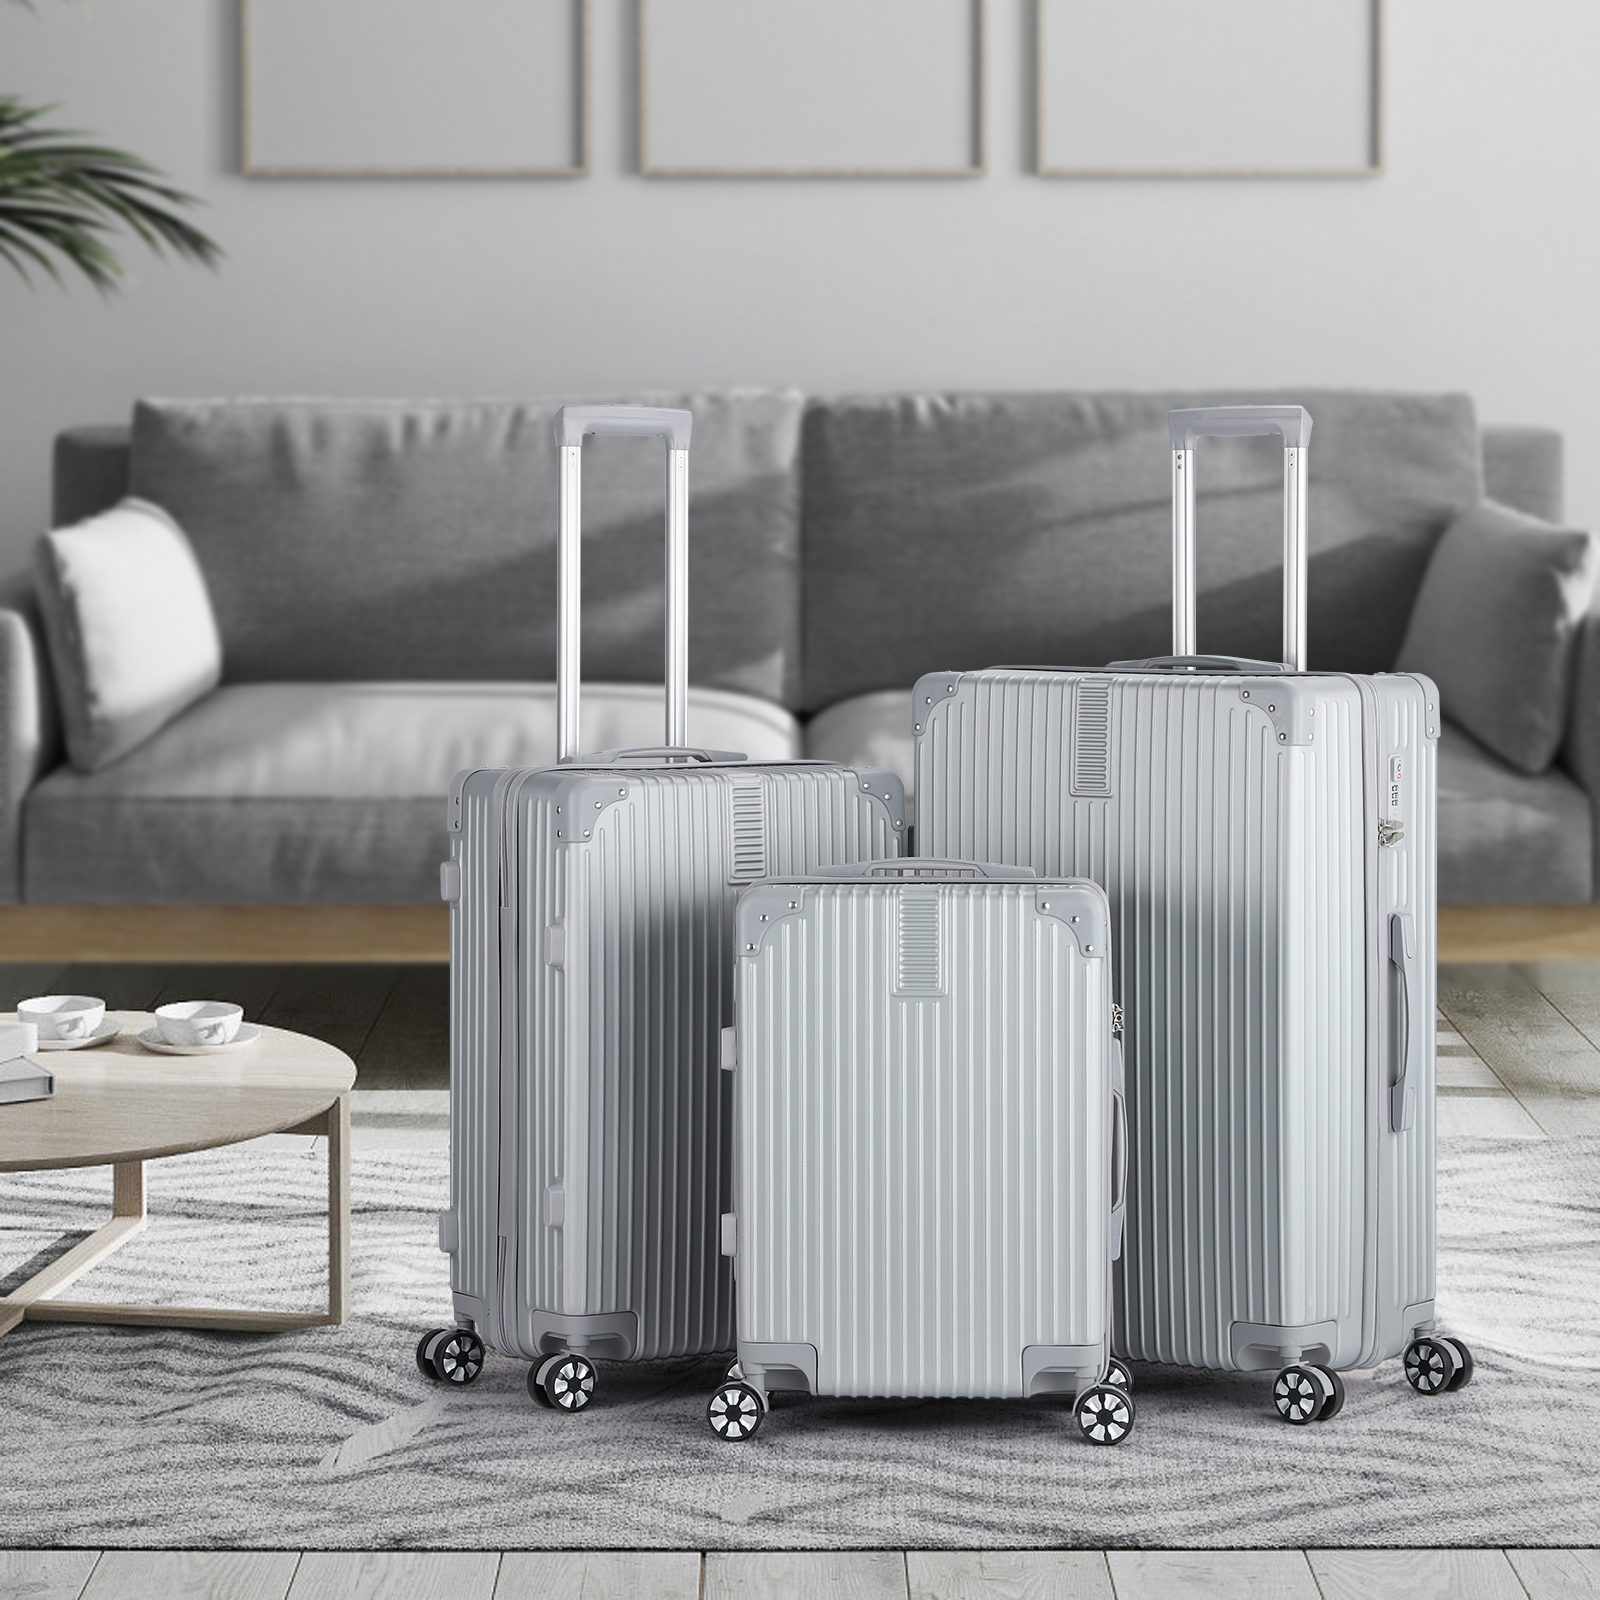 Hikolayae Border Collection Hardside Spinner Luggage Sets in Argent Silver, 3 Piece - TSA Lock - image 4 of 5